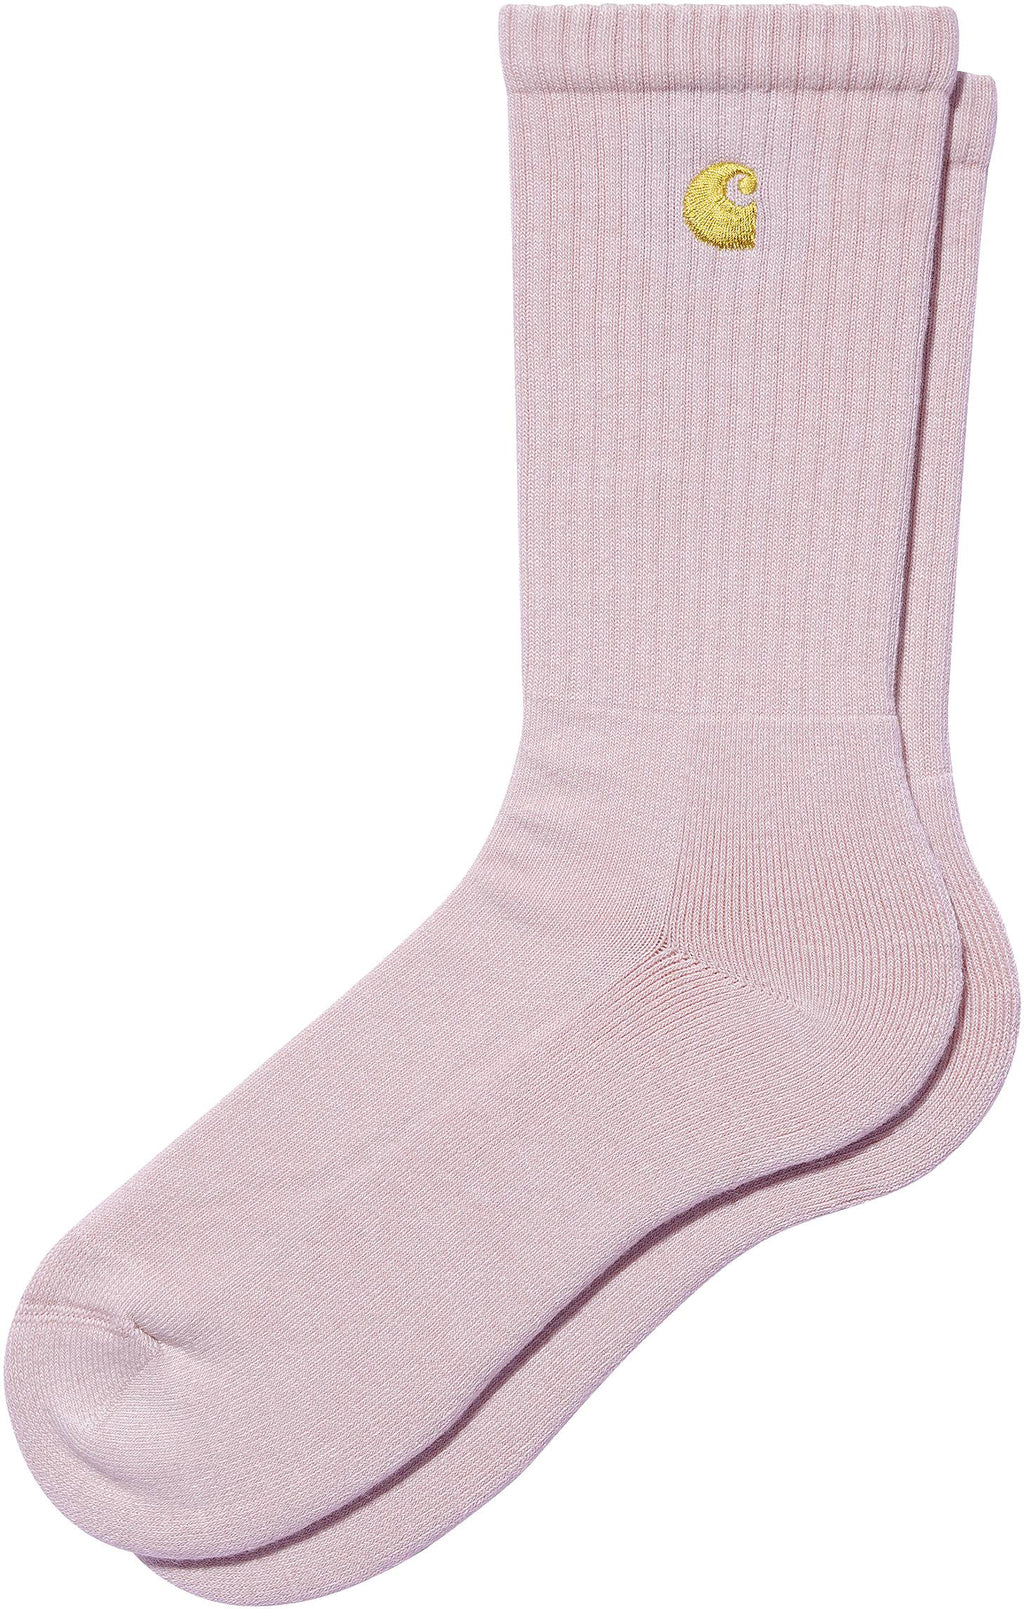  Carhartt Wip Calze Chase Socks Pale Quartz Rosa Uomo - 1